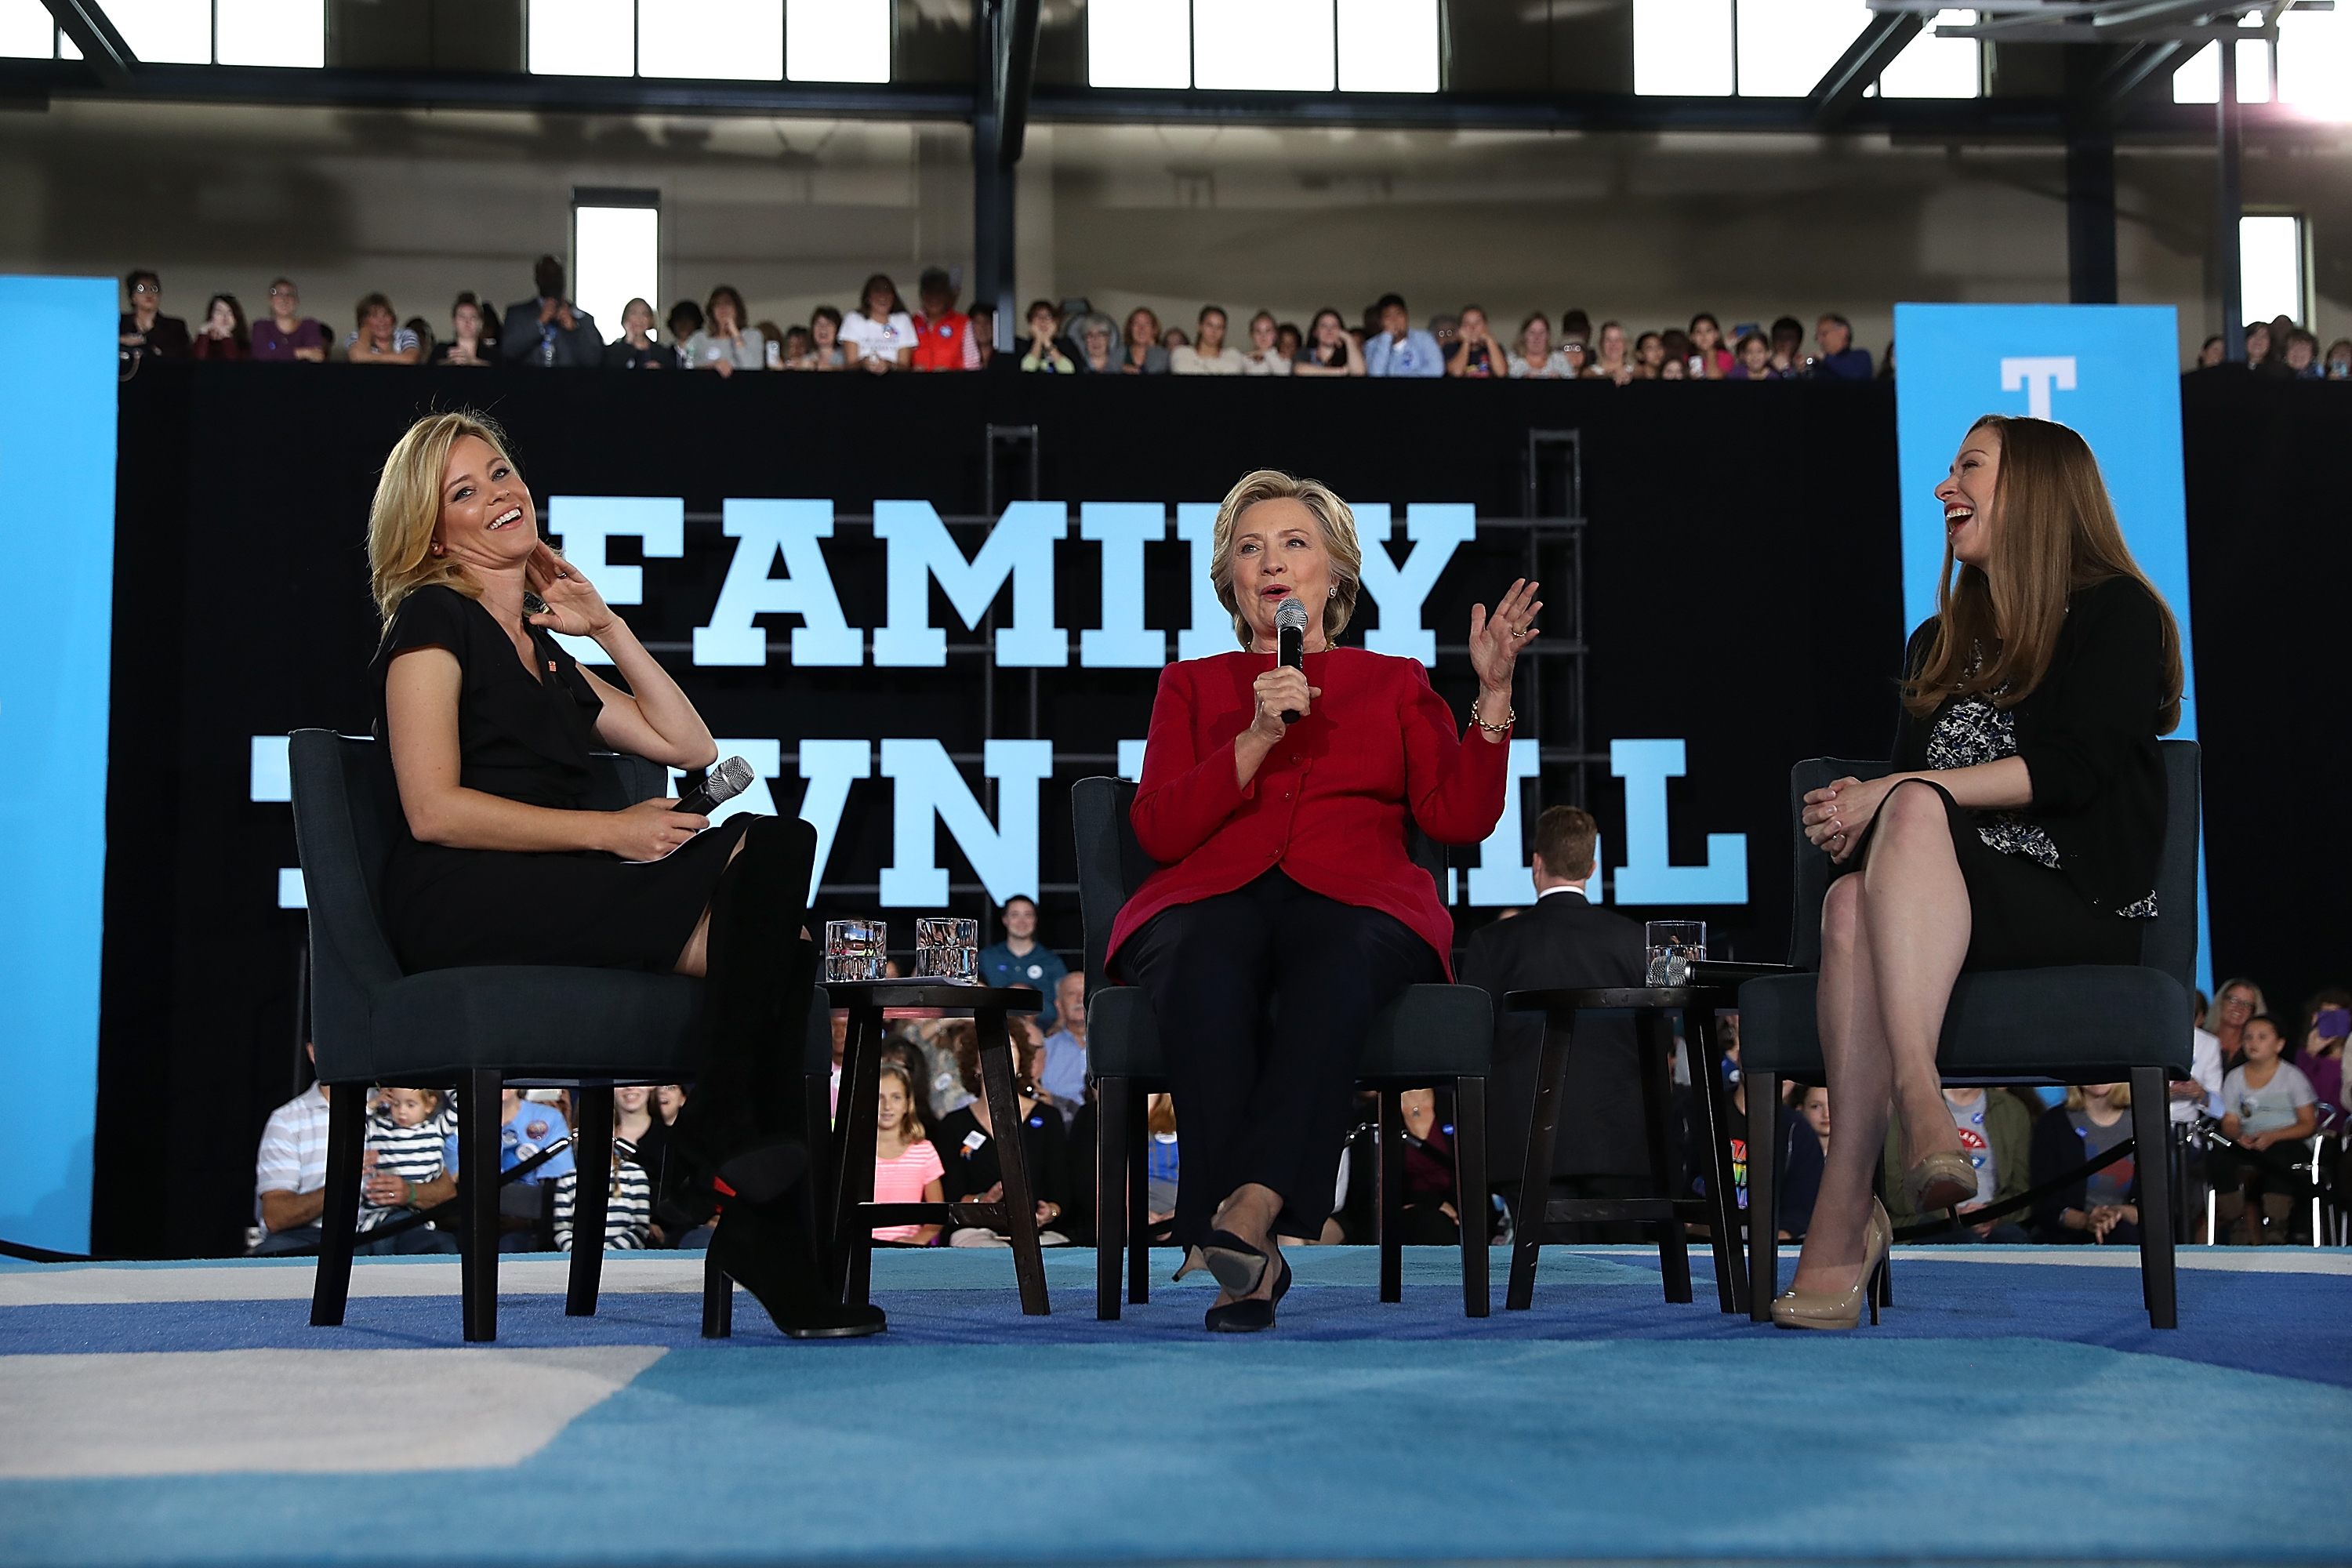 Hillary Clinton Campaigns Across Pennsylvania